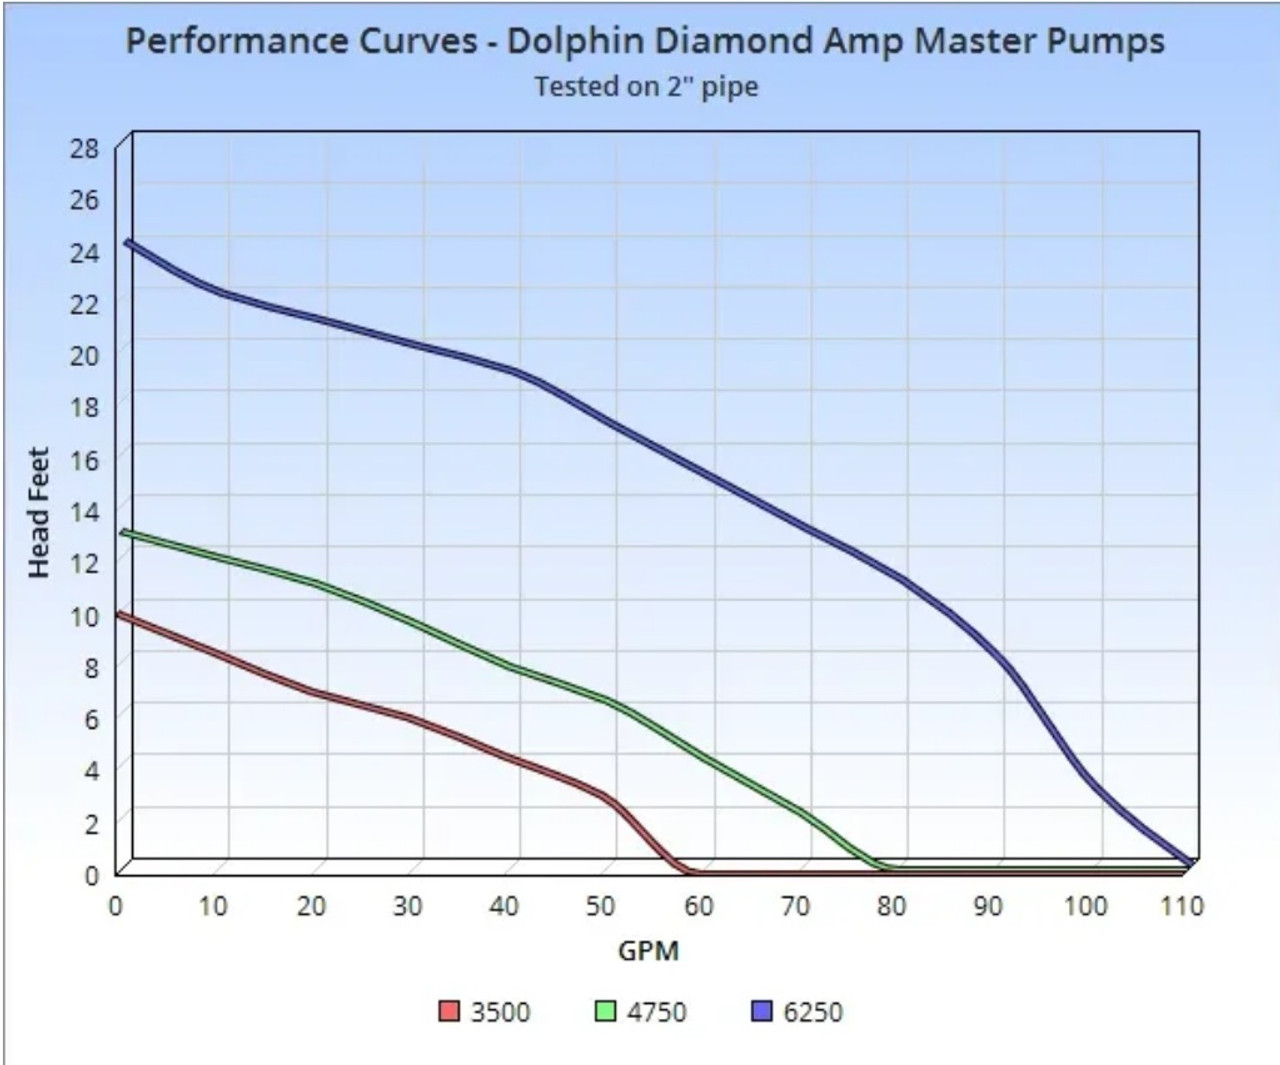 Dolphin Diamond Amp Master 3500 Pump - 3500 gph (FREE SHIPPING)